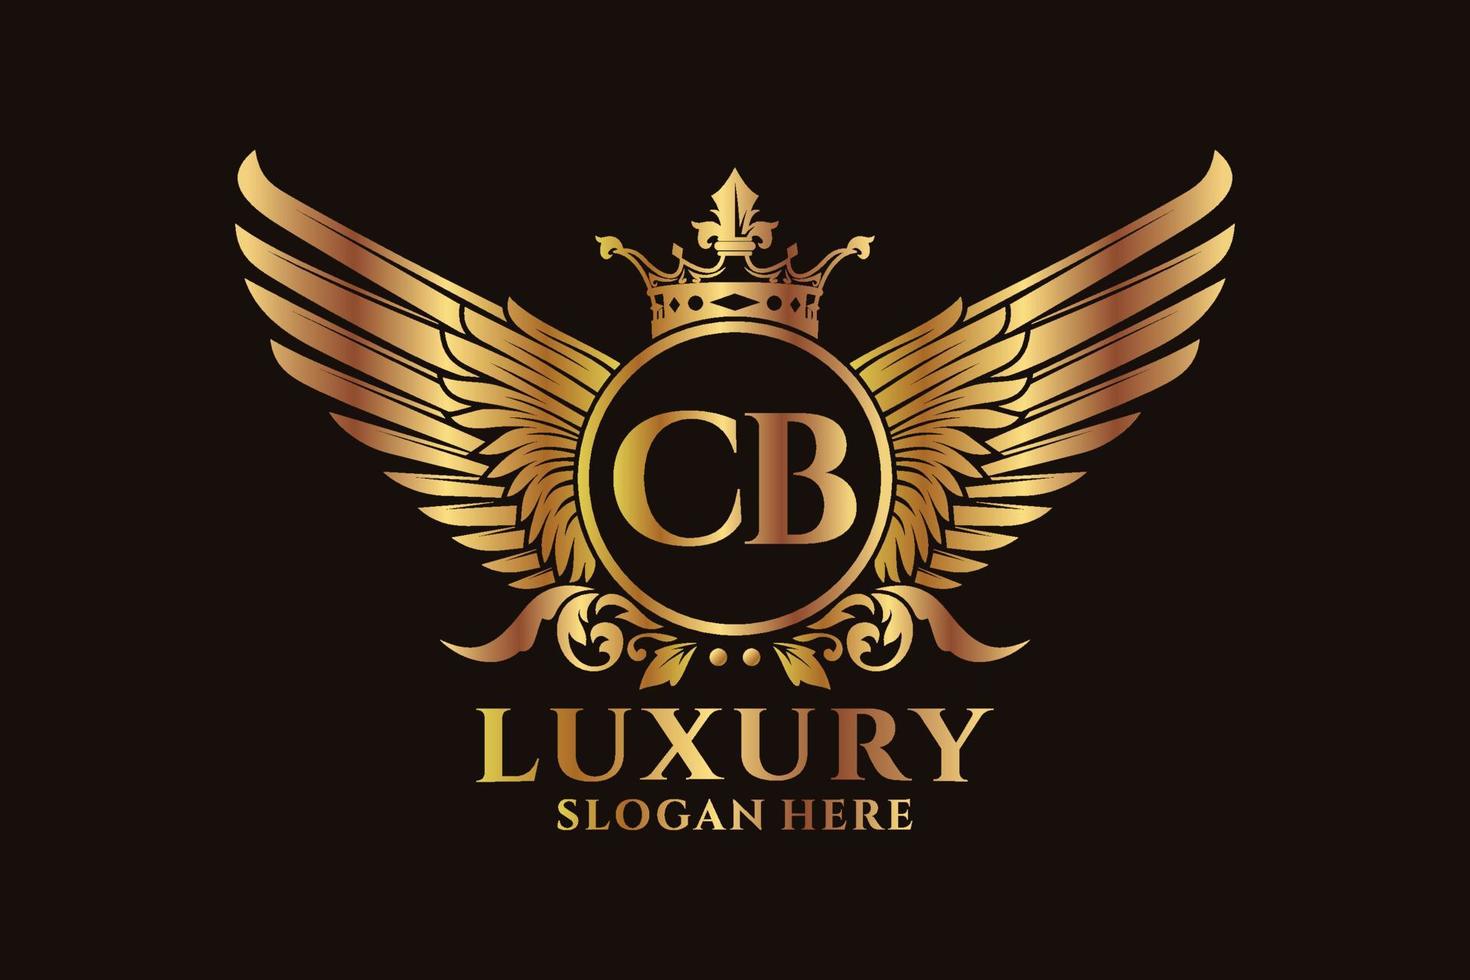 luxe Koninklijk vleugel brief cb kam goud kleur logo vector, zege logo, kam logo, vleugel logo, vector logo sjabloon.